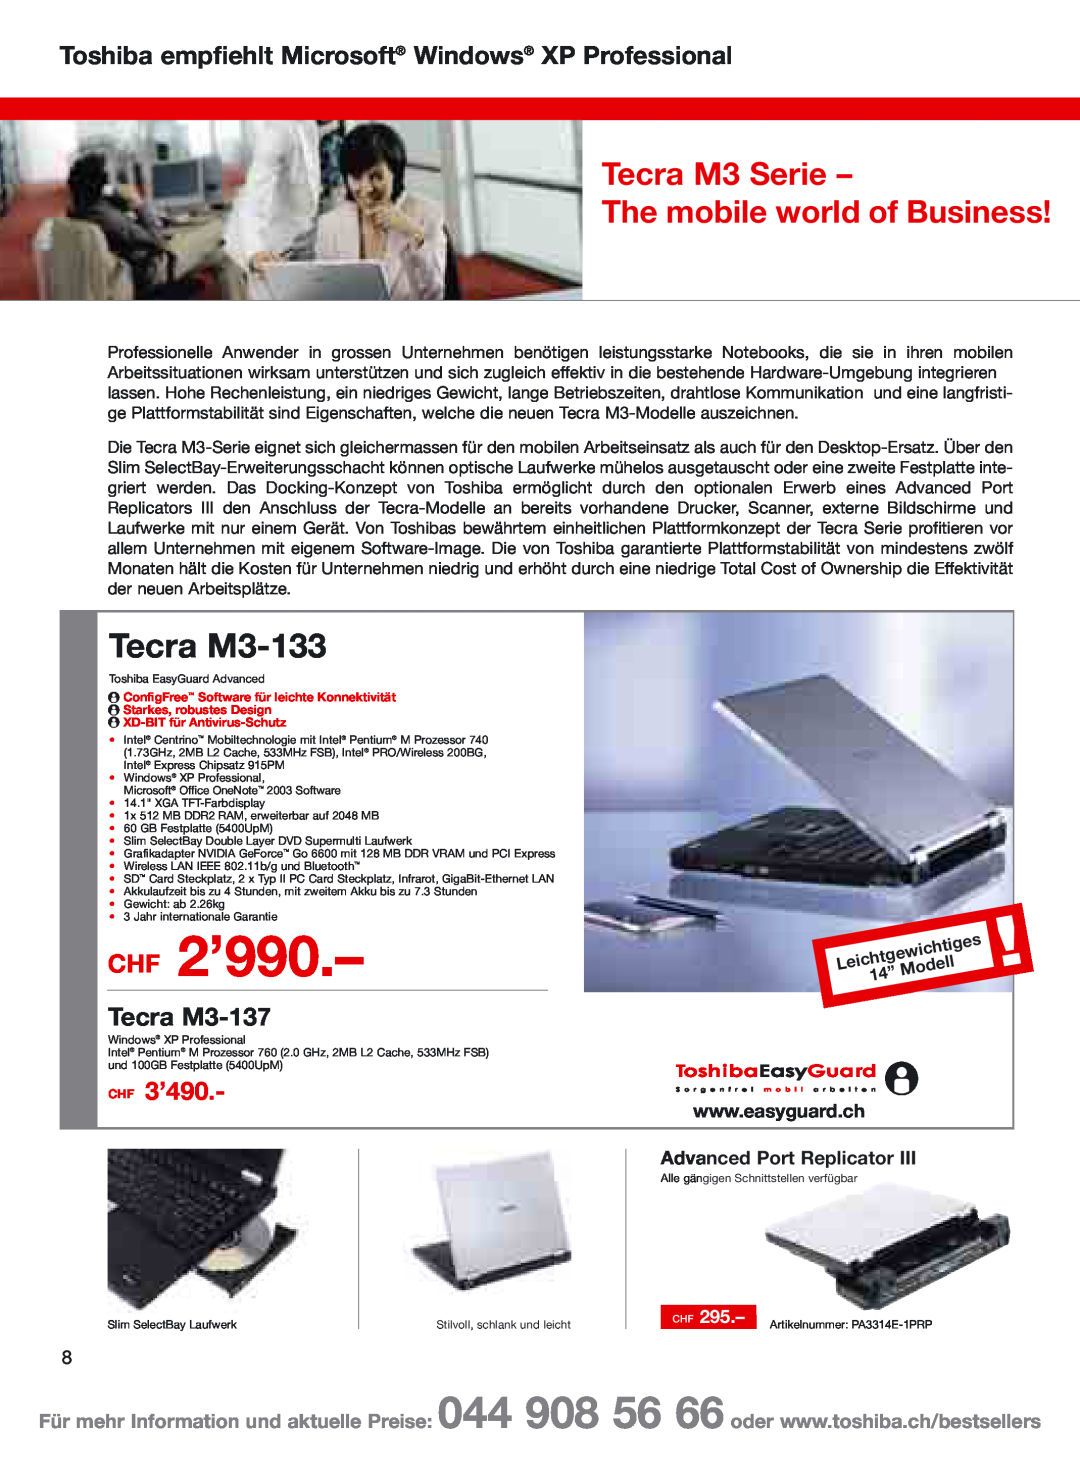 Toshiba Portg R200 Tecra M3-133, Tecra M3 Serie The mobile world of Business, Tecra M3-137, CHF 3’490, Modell, CHF 2’990 